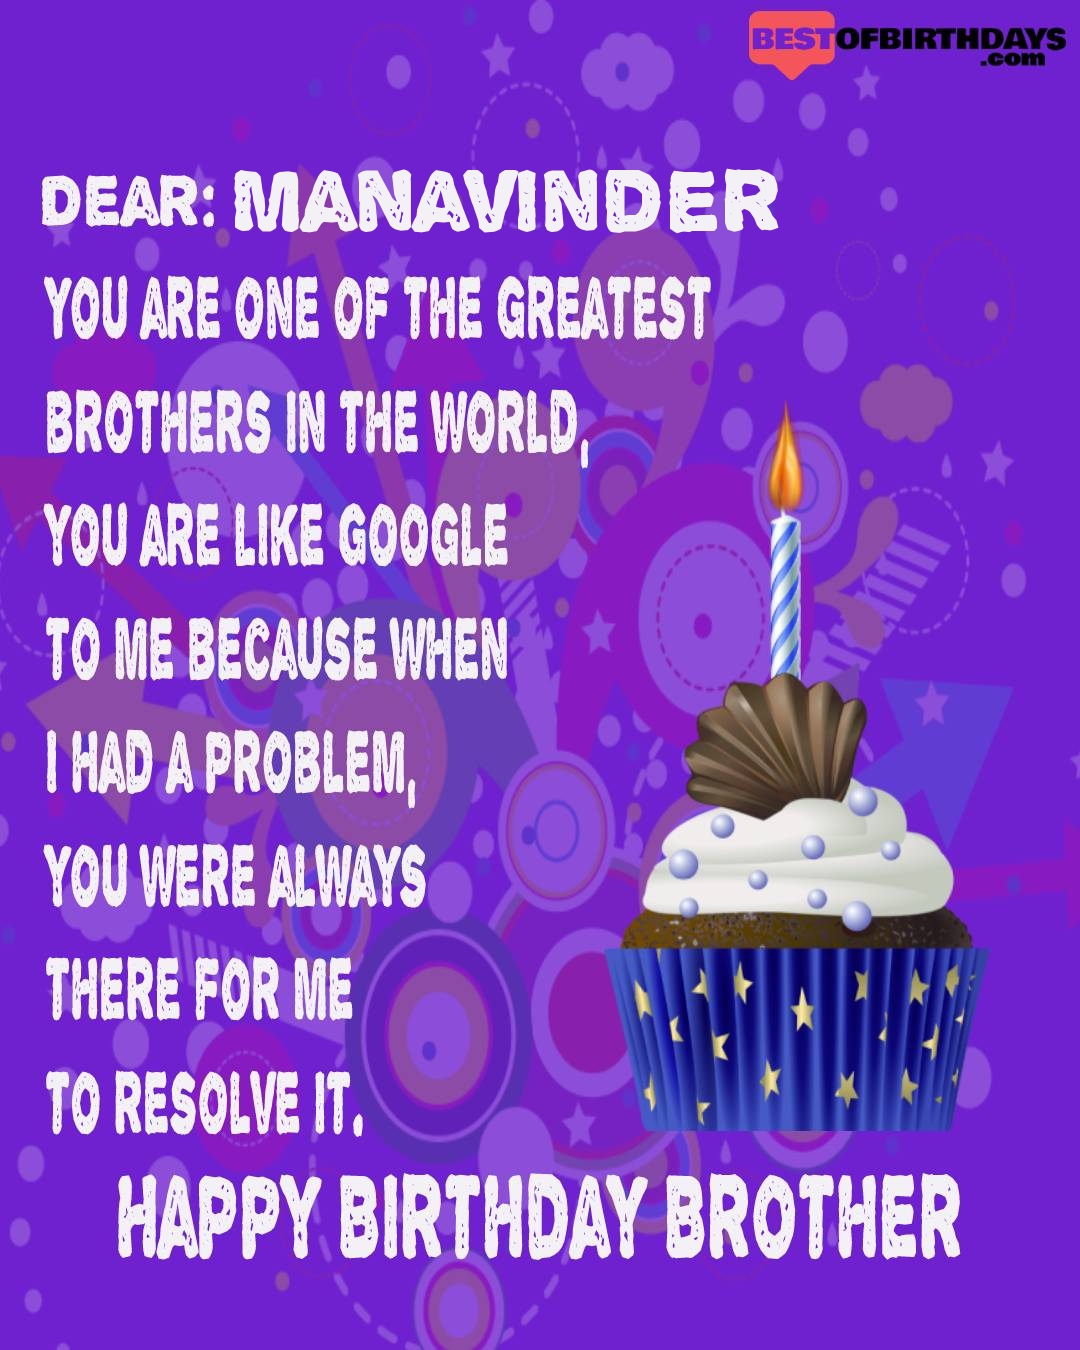 Happy birthday manavinder bhai brother bro